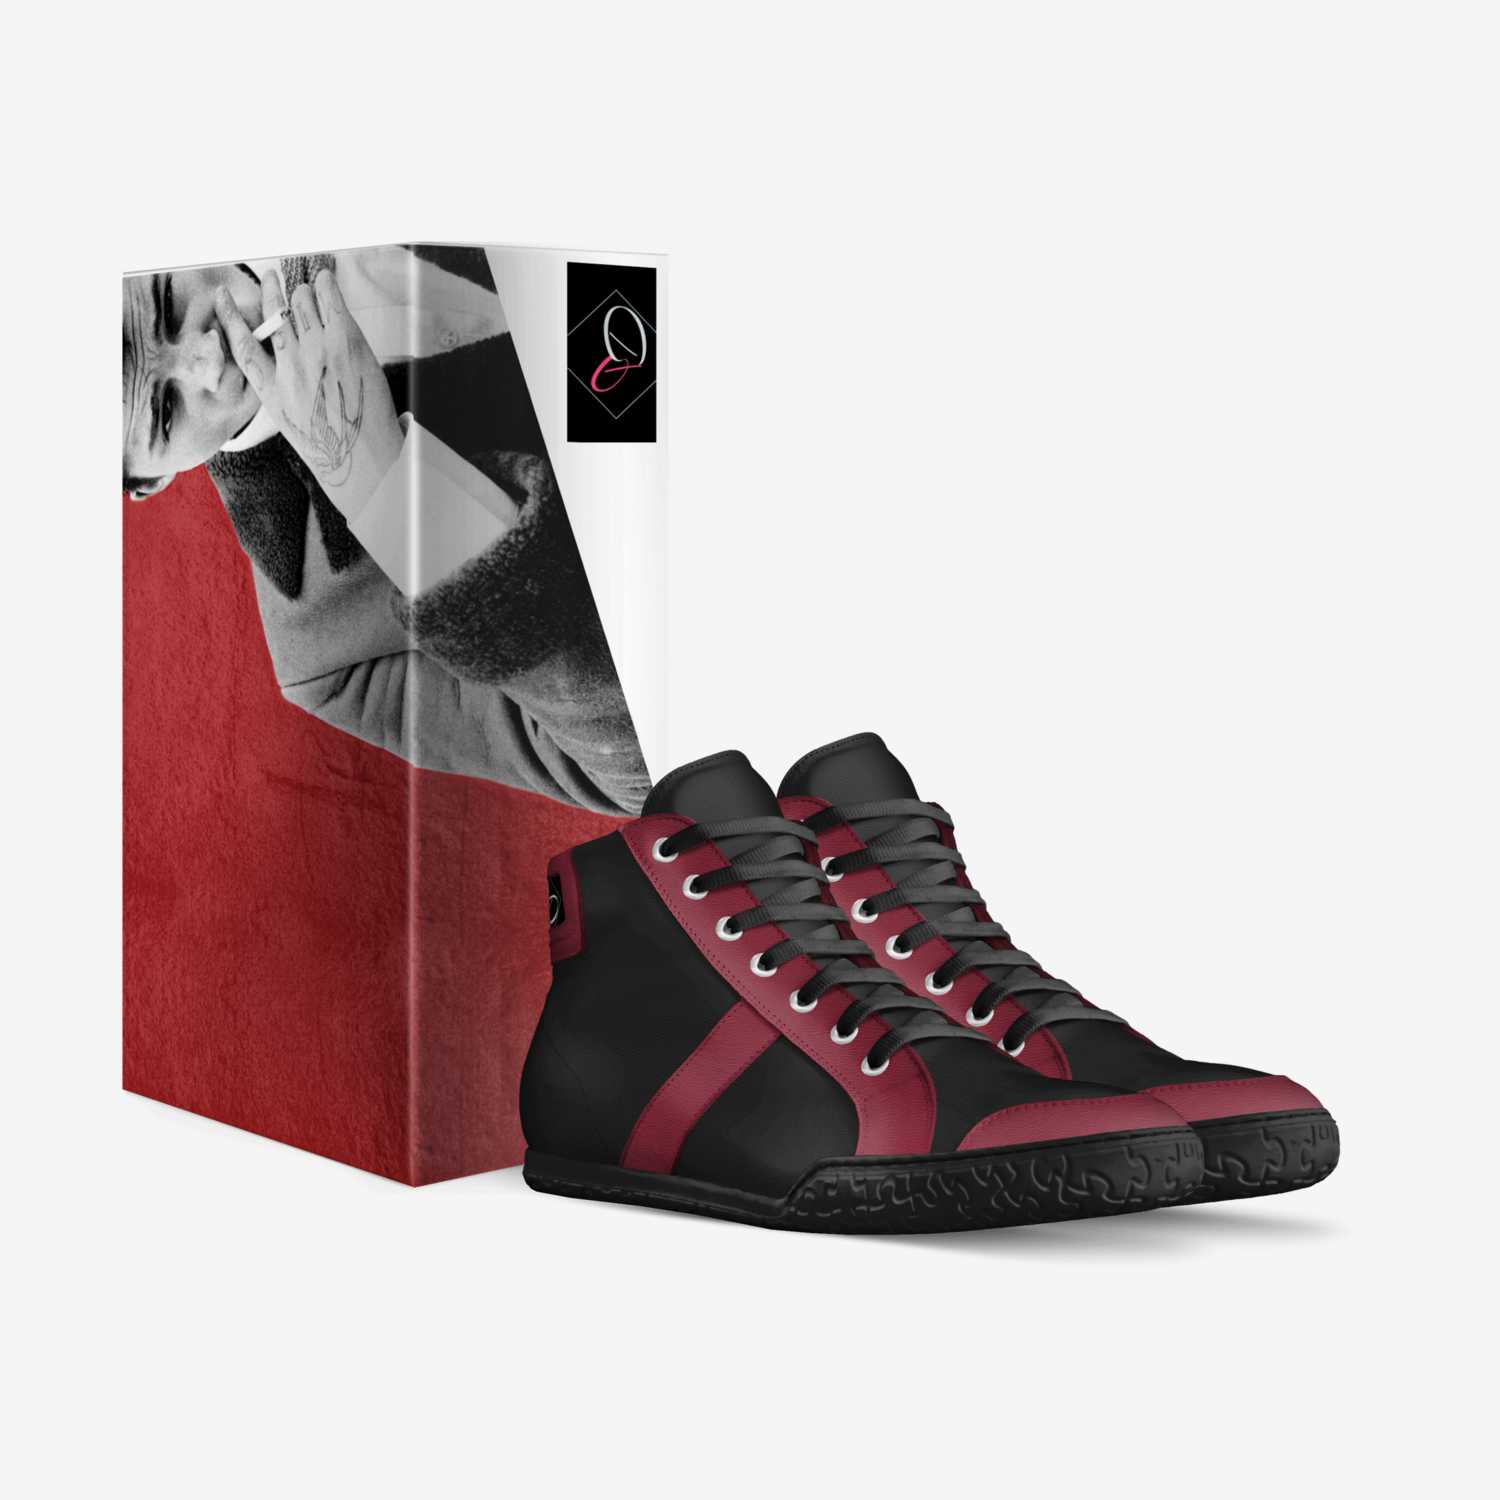 Dp custom made in Italy shoes by Ldv Ldv | Box view